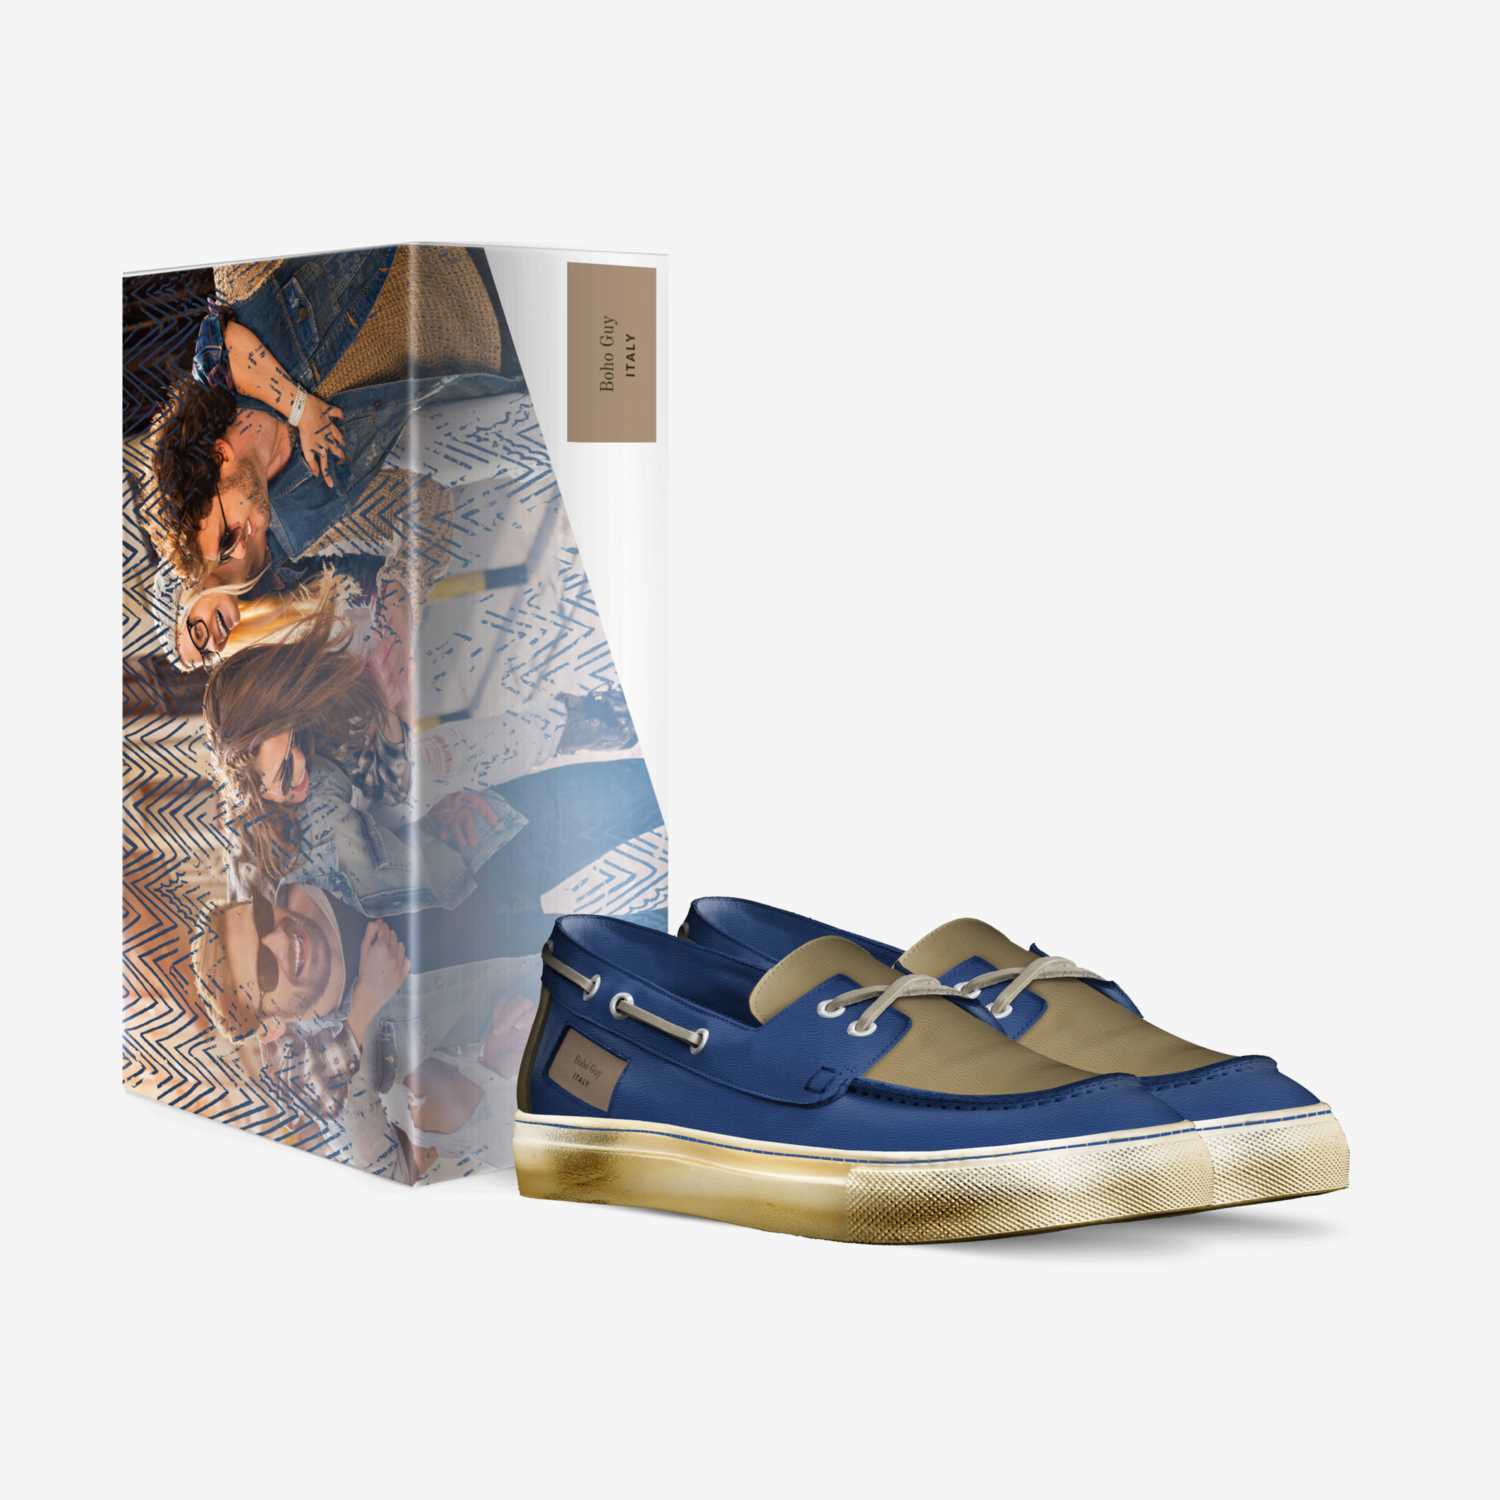 Boho Guy custom made in Italy shoes by Marijke Verkerk | Box view